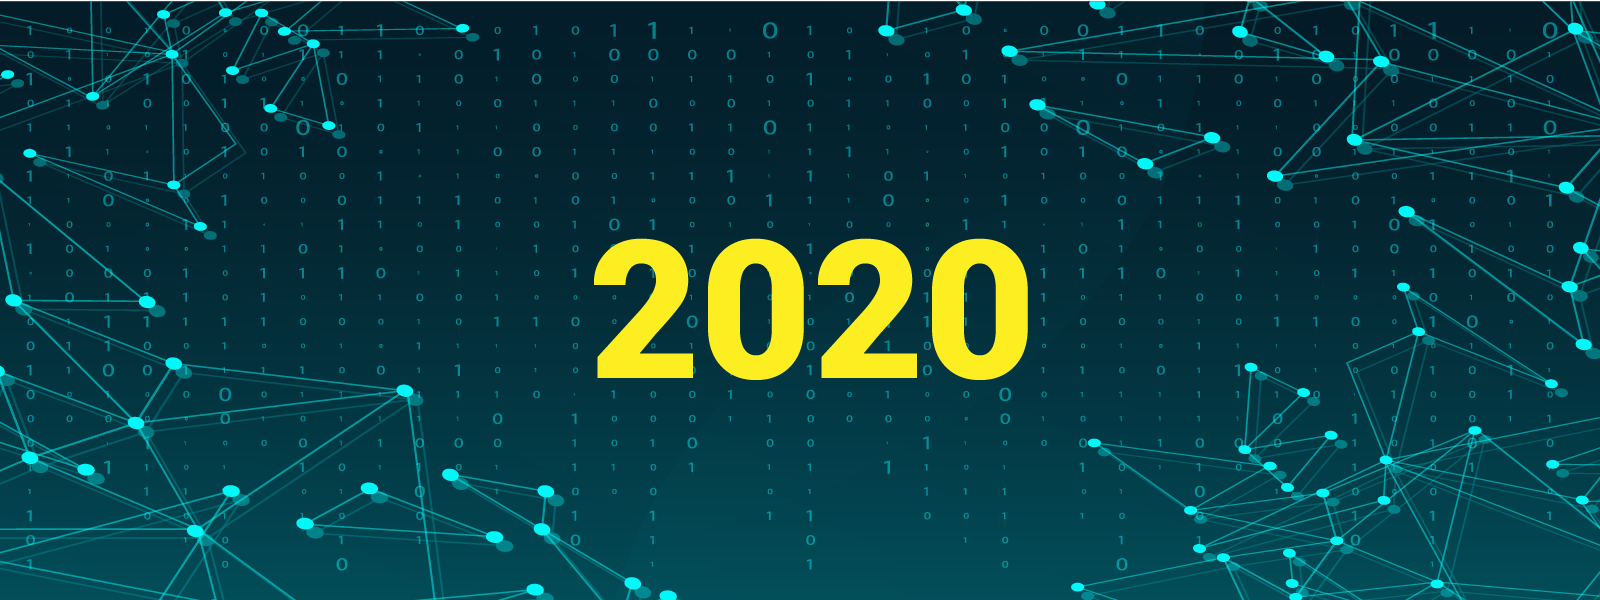 2020 Prediction